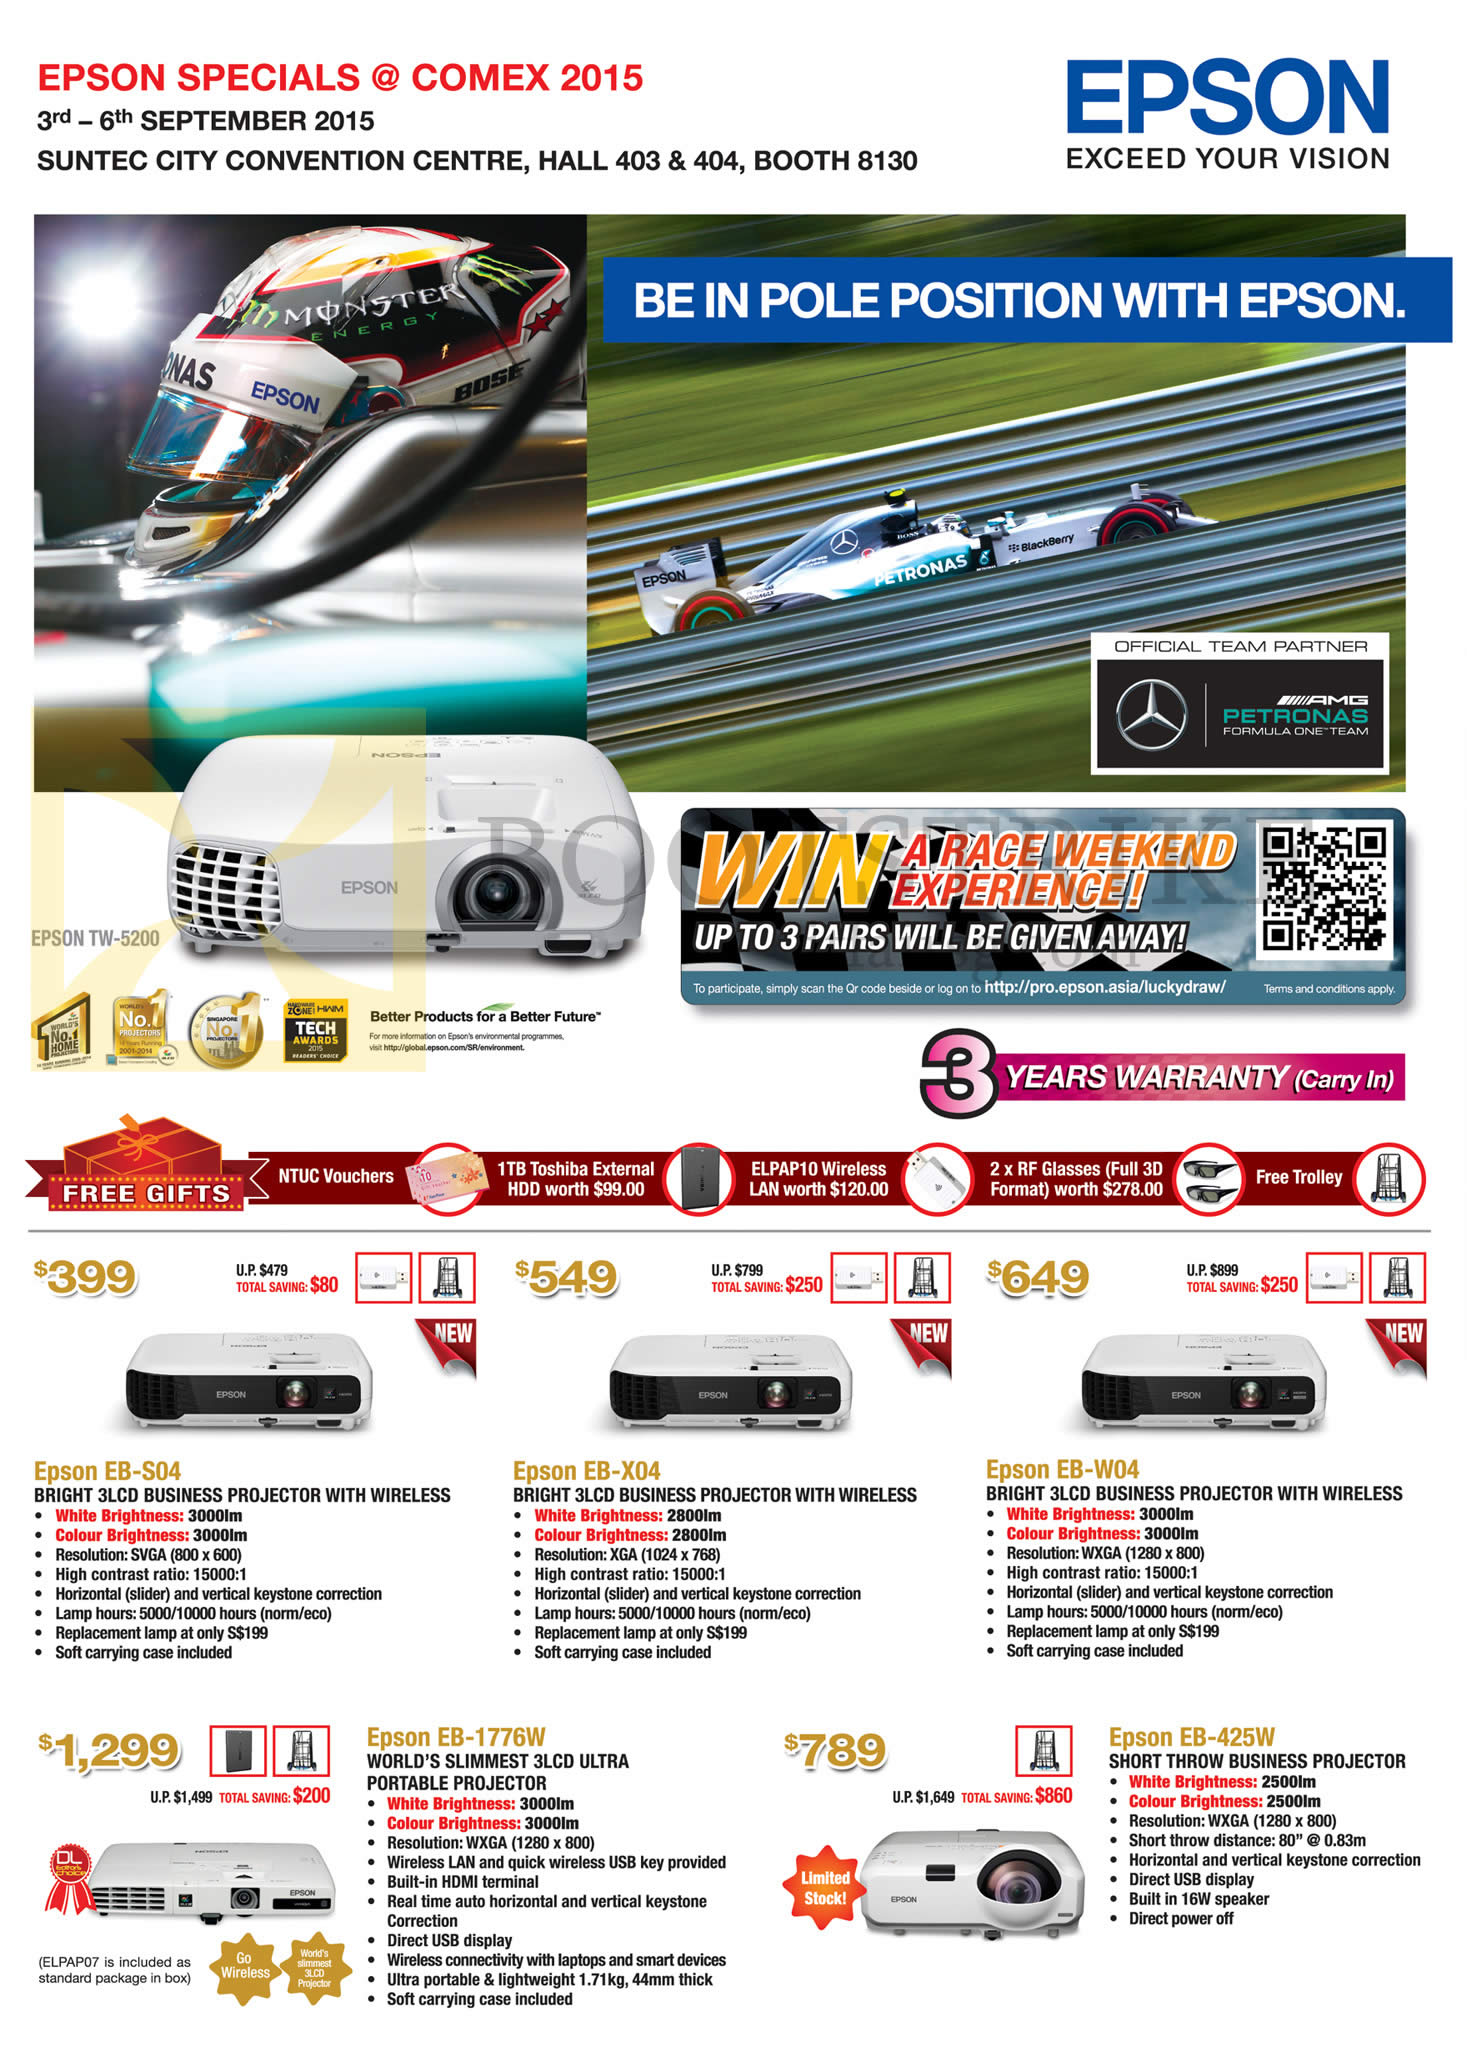 COMEX 2015 price list image brochure of Epson Projectors EB-S04, X04, W04, 1776W, 425W